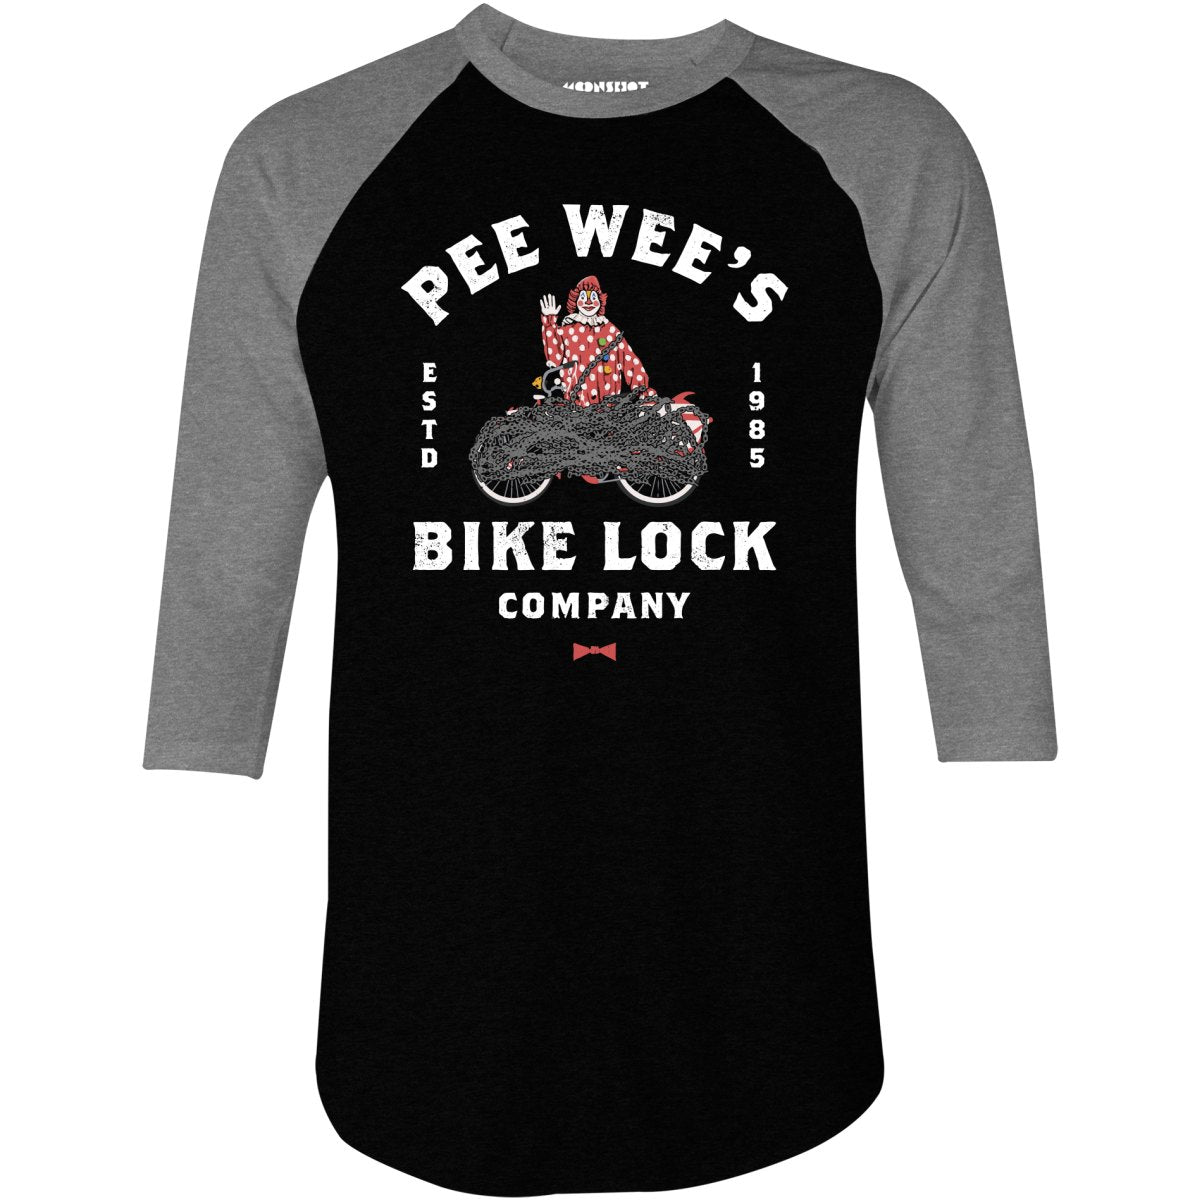 Pee Wee's Bike Lock Company - 3/4 Sleeve Raglan T-Shirt